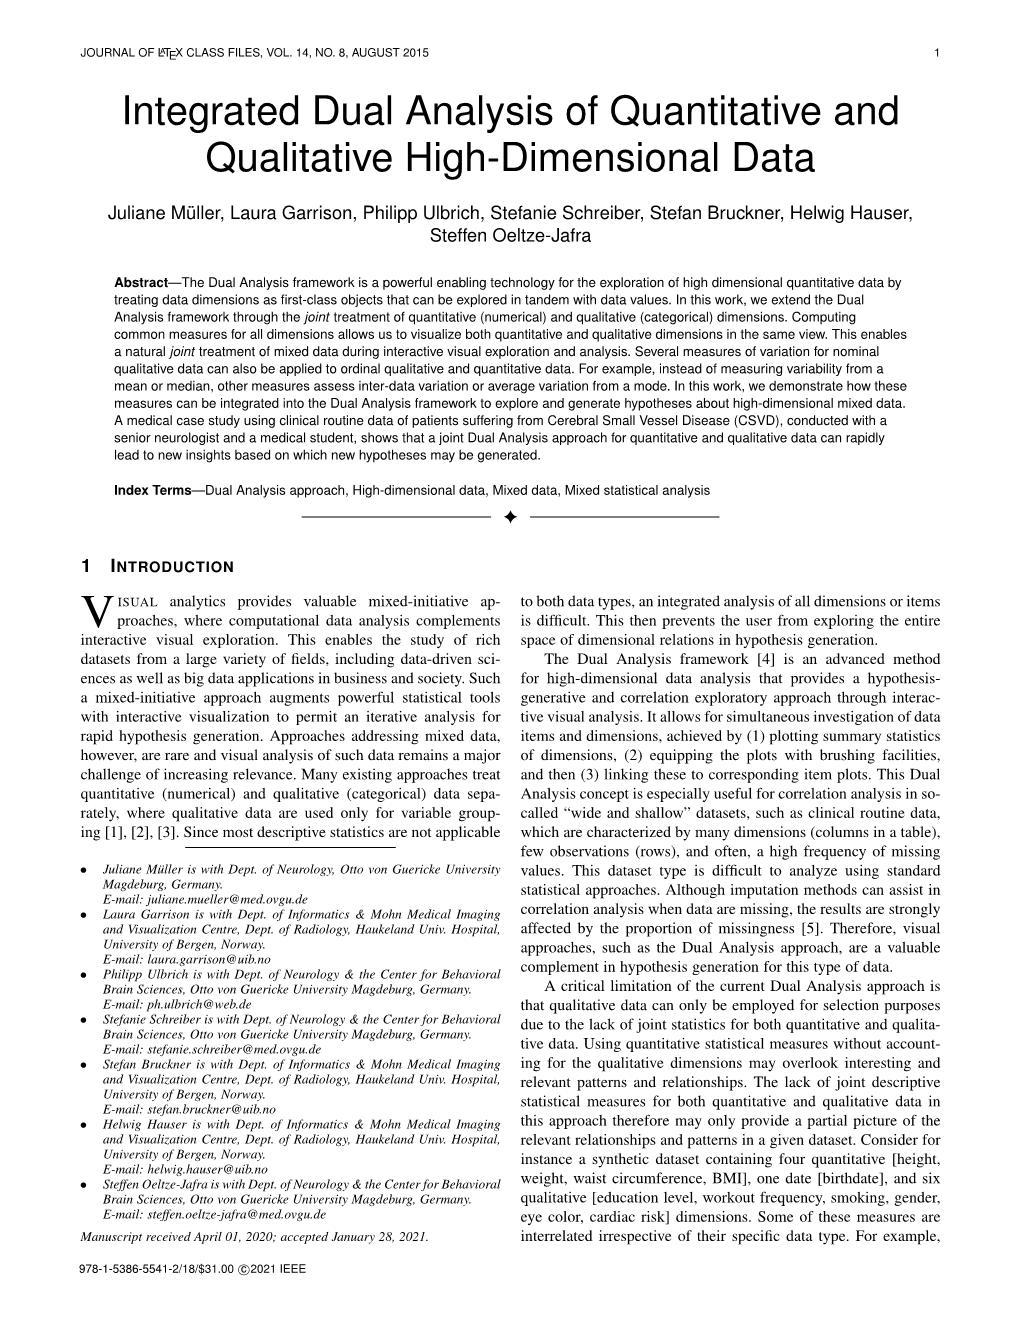 Integrated Dual Analysis of Quantitative and Qualitative High-Dimensional Data